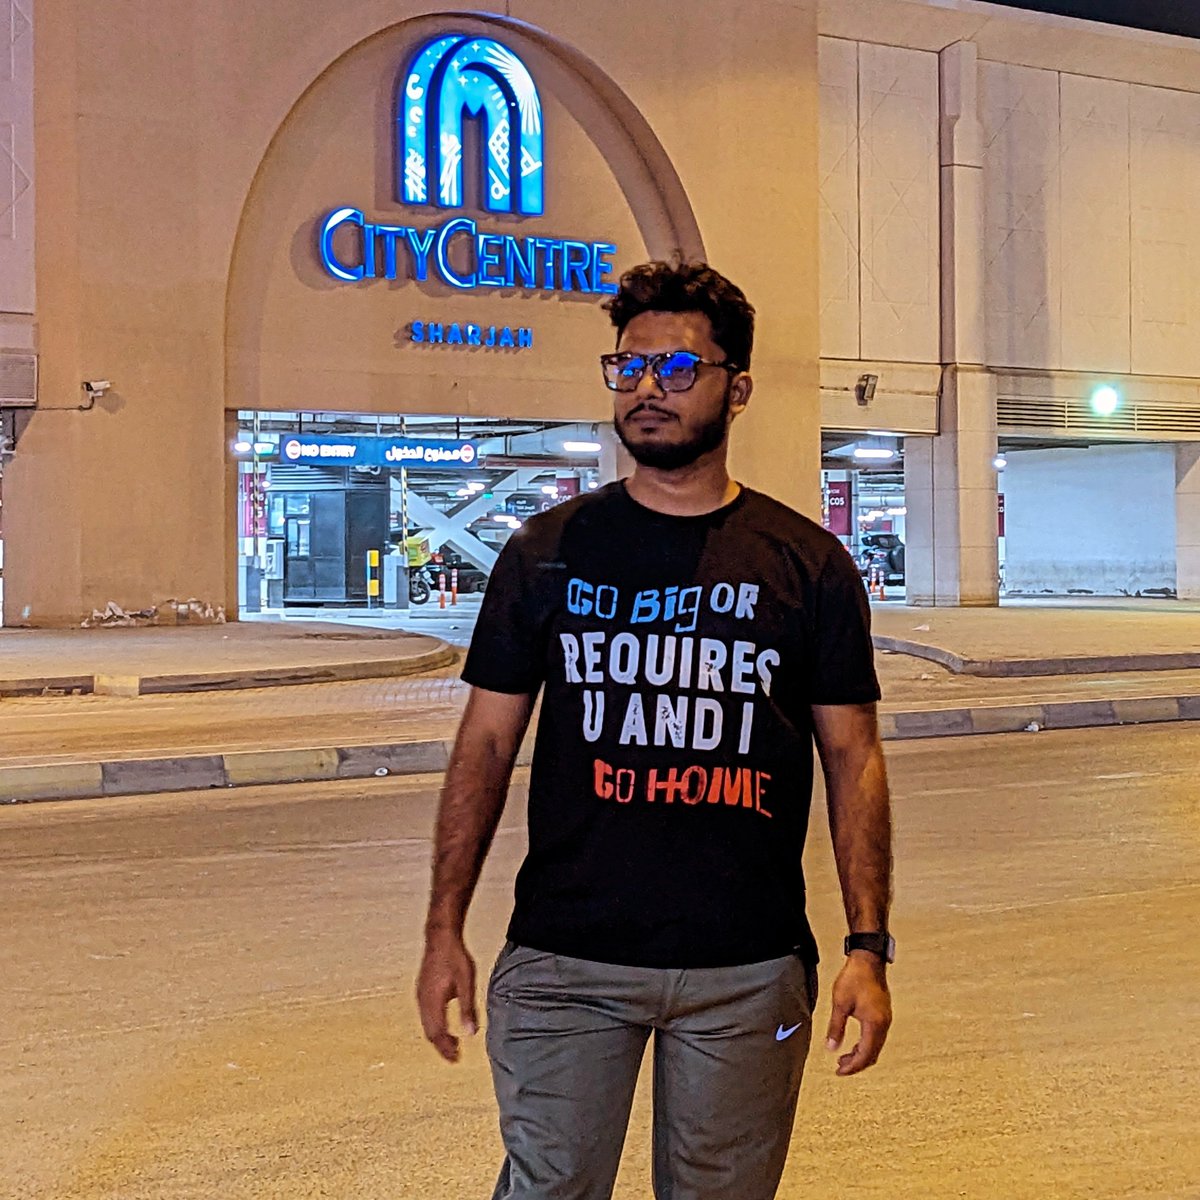 Most famous super shop in Sharjah 

#unitedarabemirates #Arabs  #citycenter